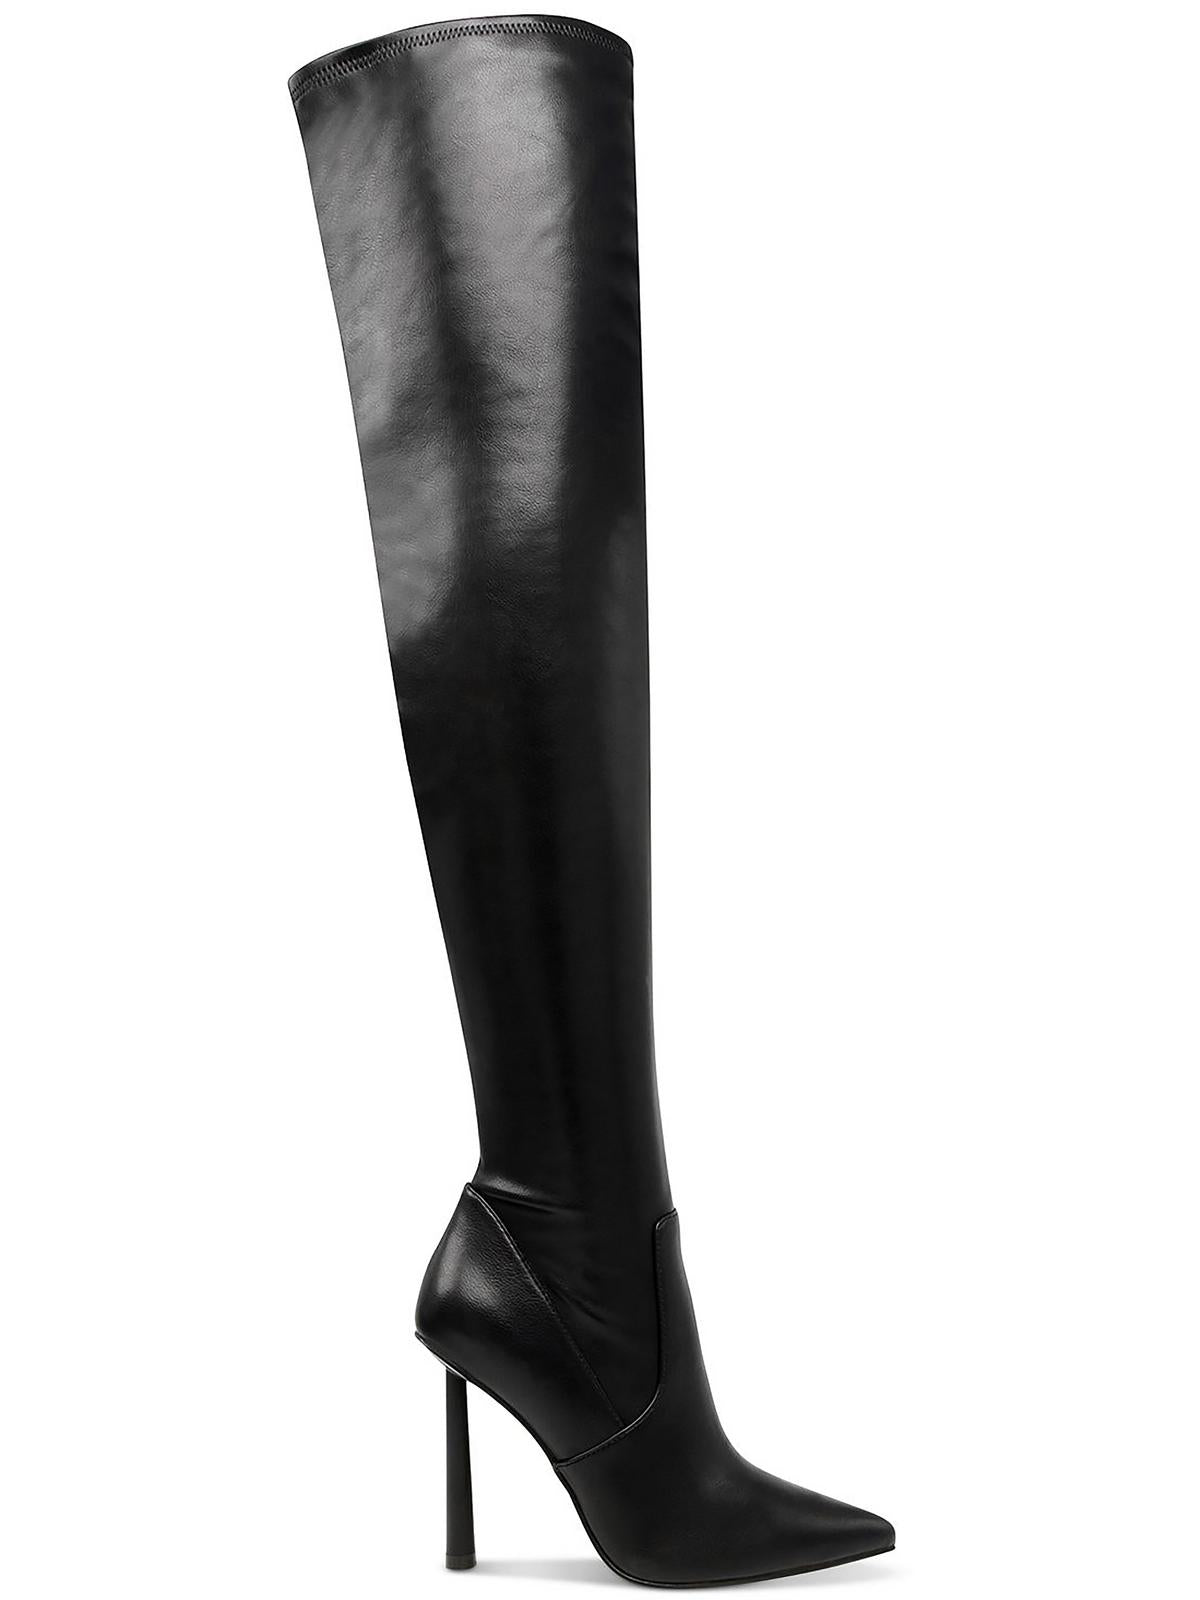 Women's Jessica Simpson Lunia Black Over the Knee High Heel Stiletto Boots